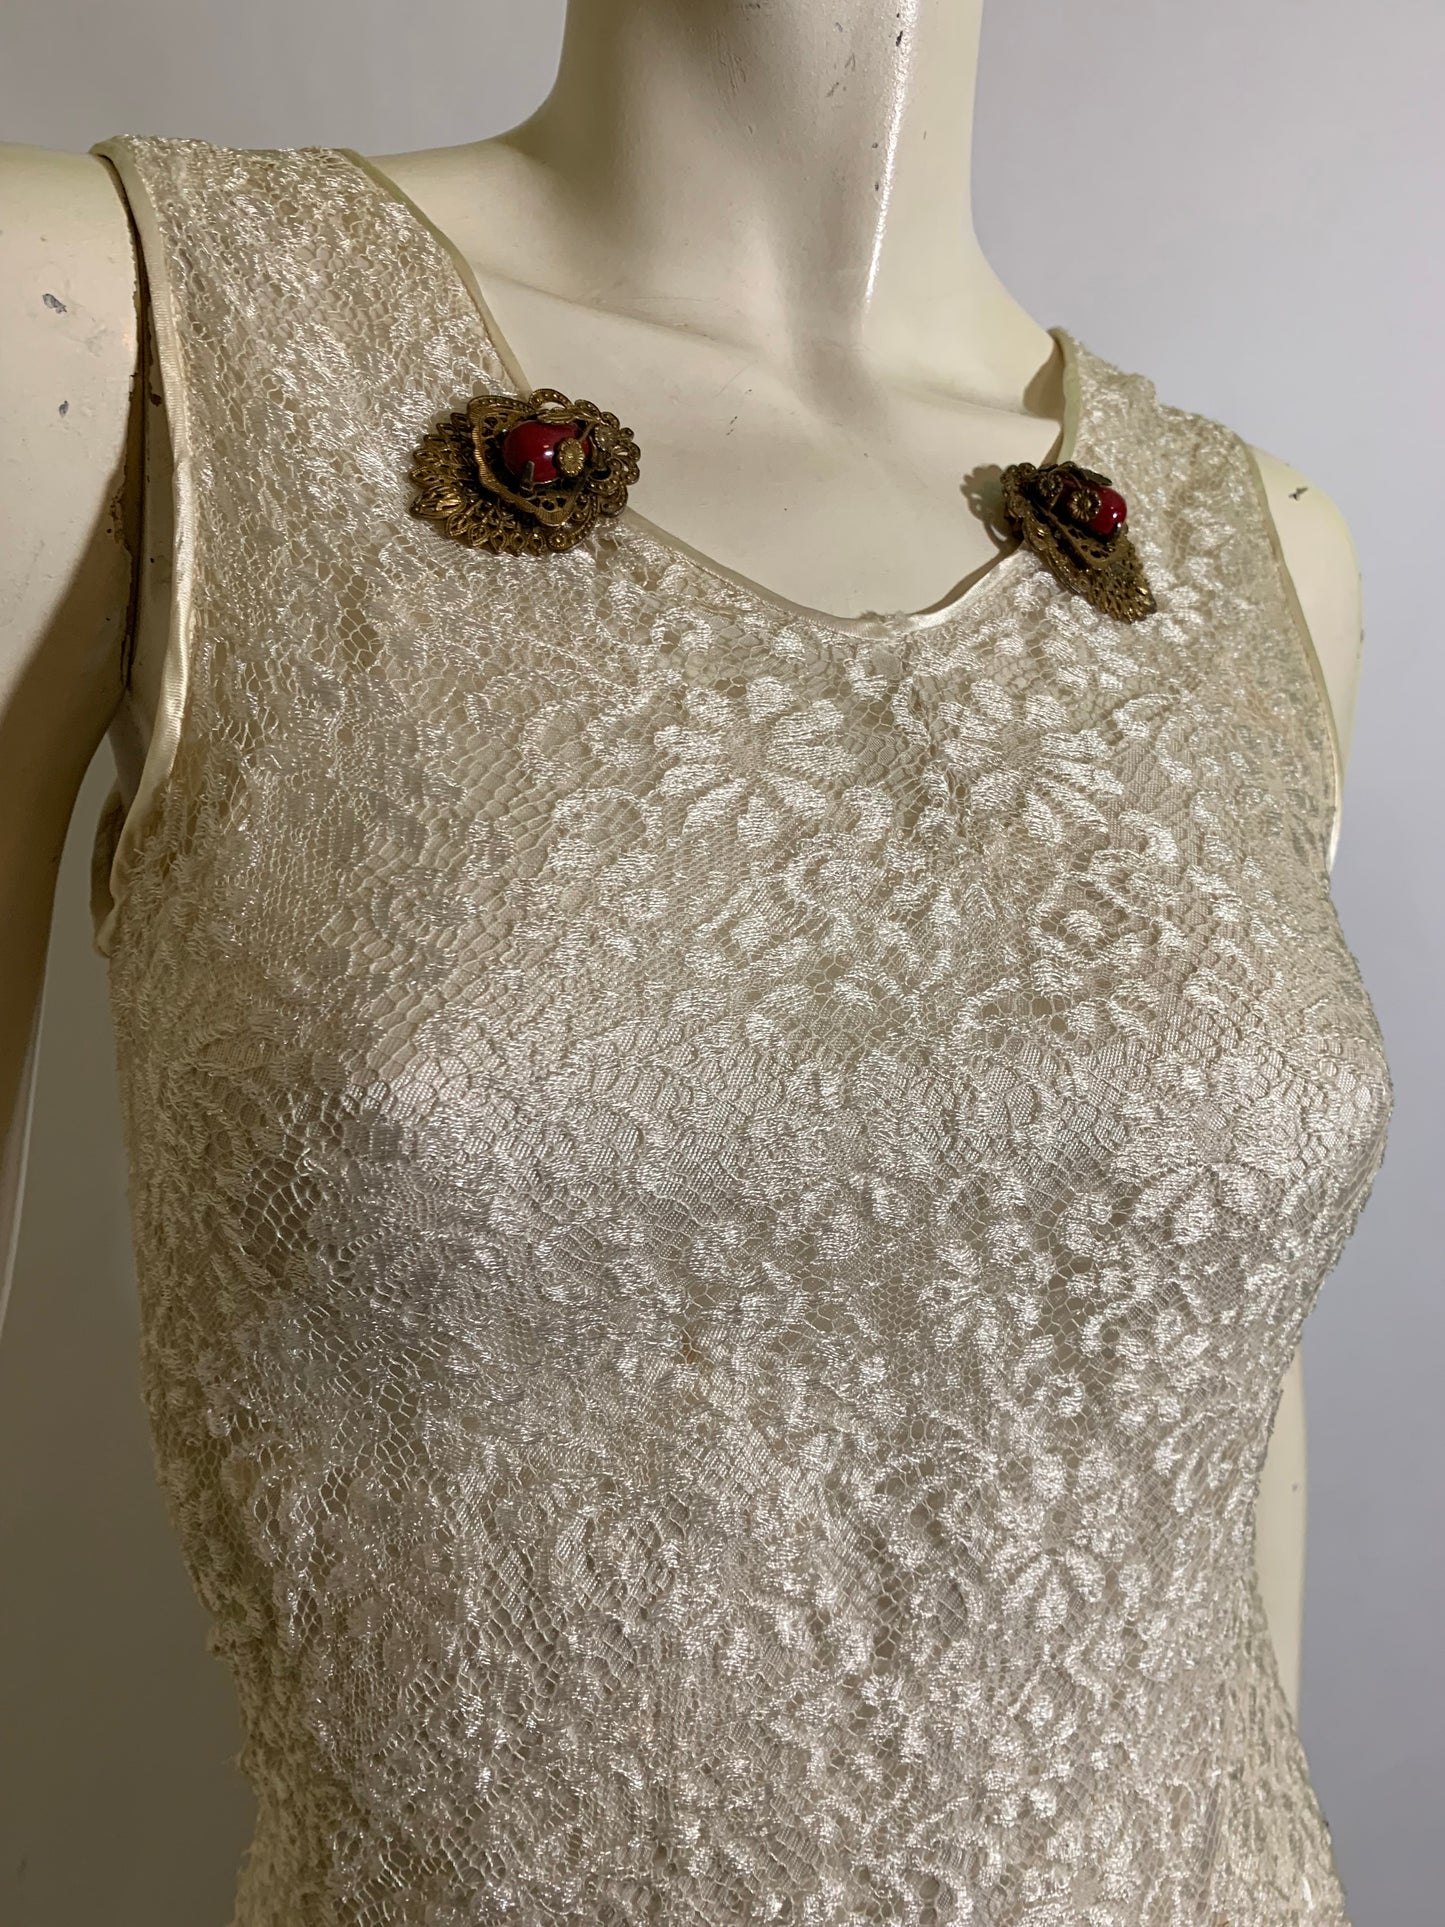 White Bias Cut Satin and Lace Dress circa 1930s